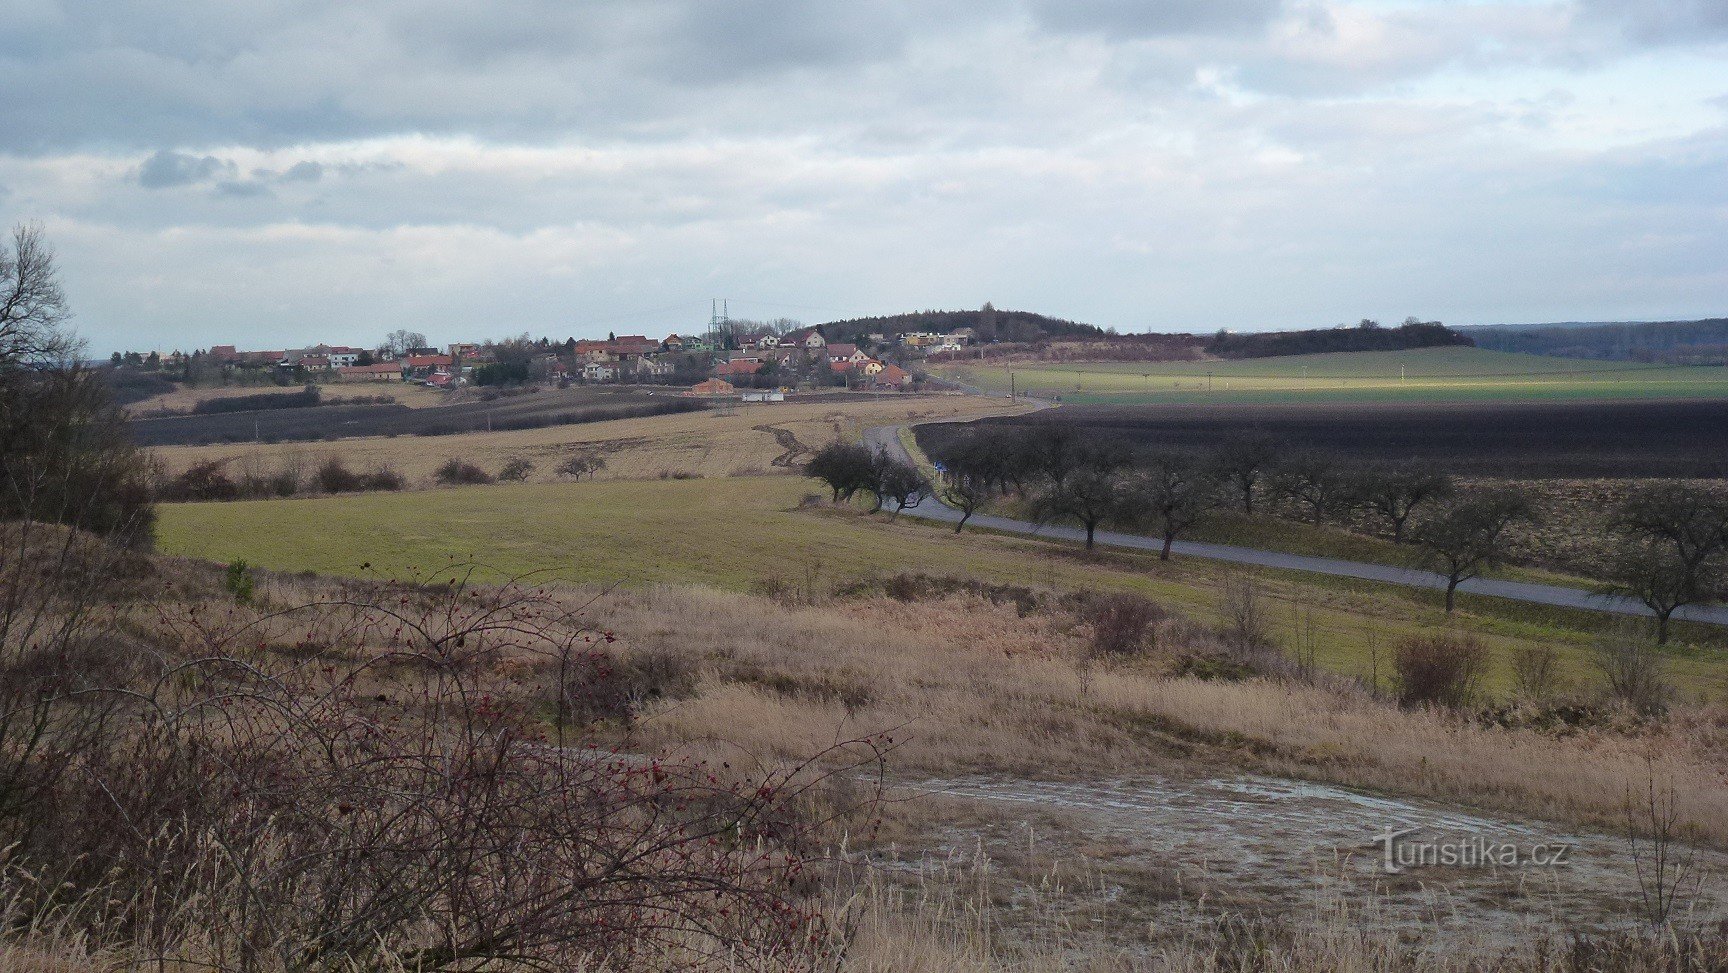 Mokošín - uitzicht op de heuvel en het dorp Mokošín vanaf de nabijgelegen jilník in Tupesy